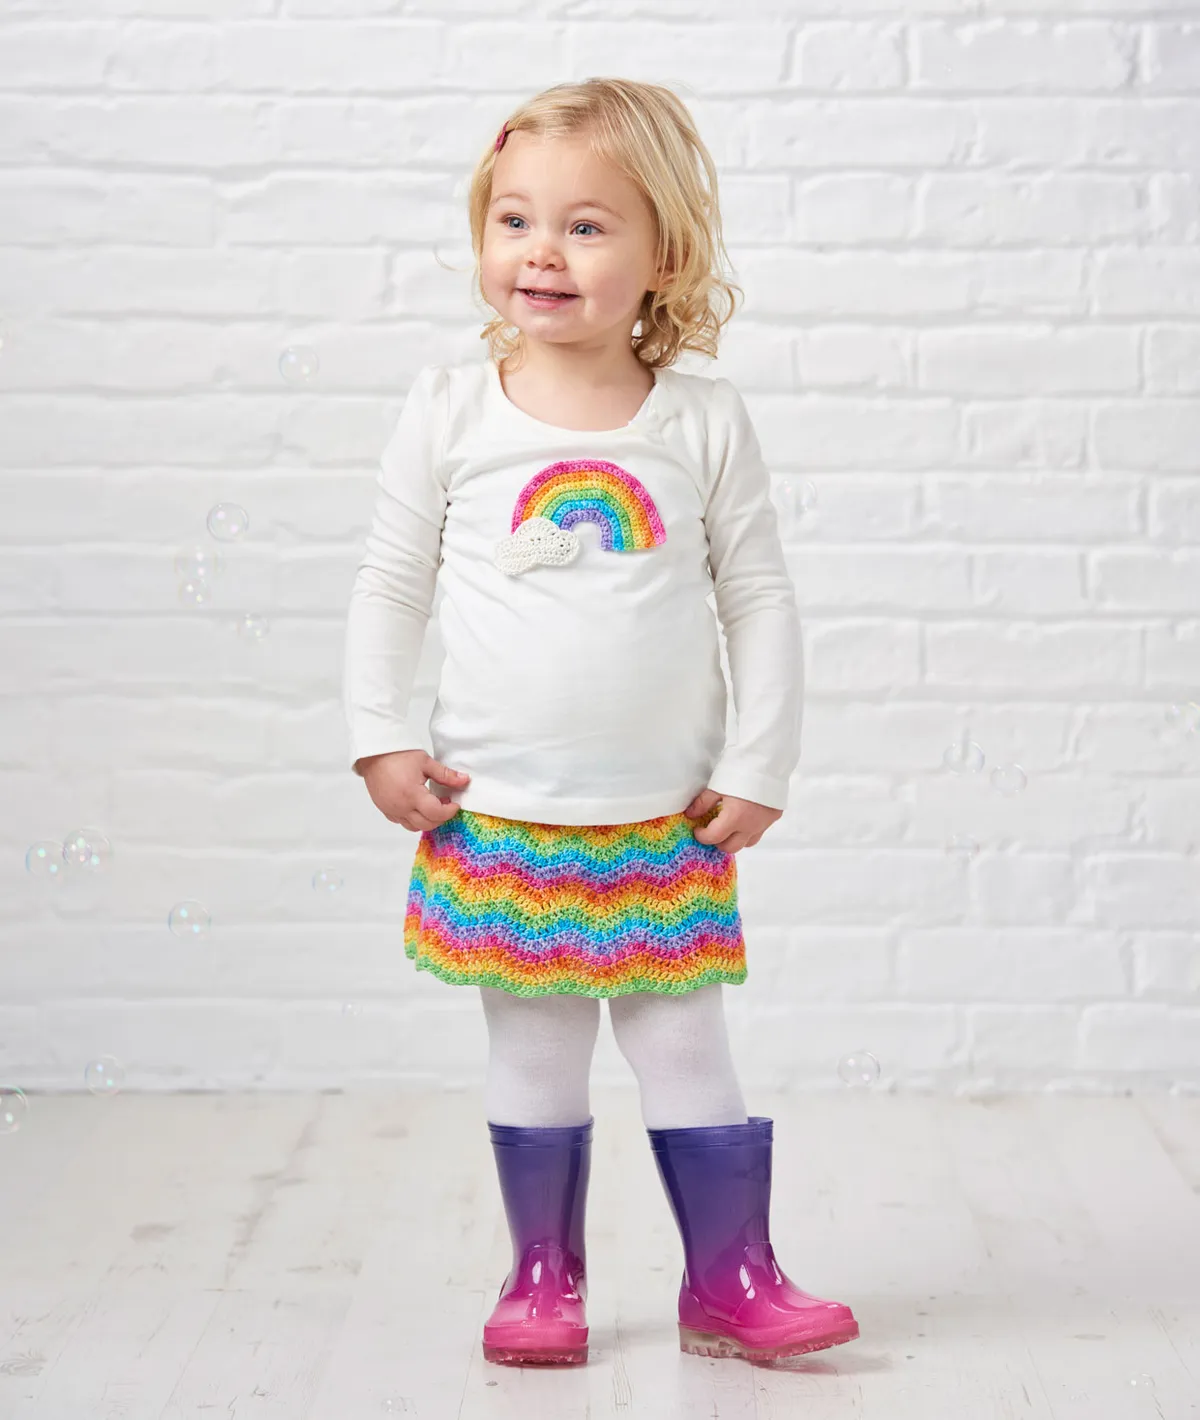 How to crochet a rainbow - crochet rainbow pattern